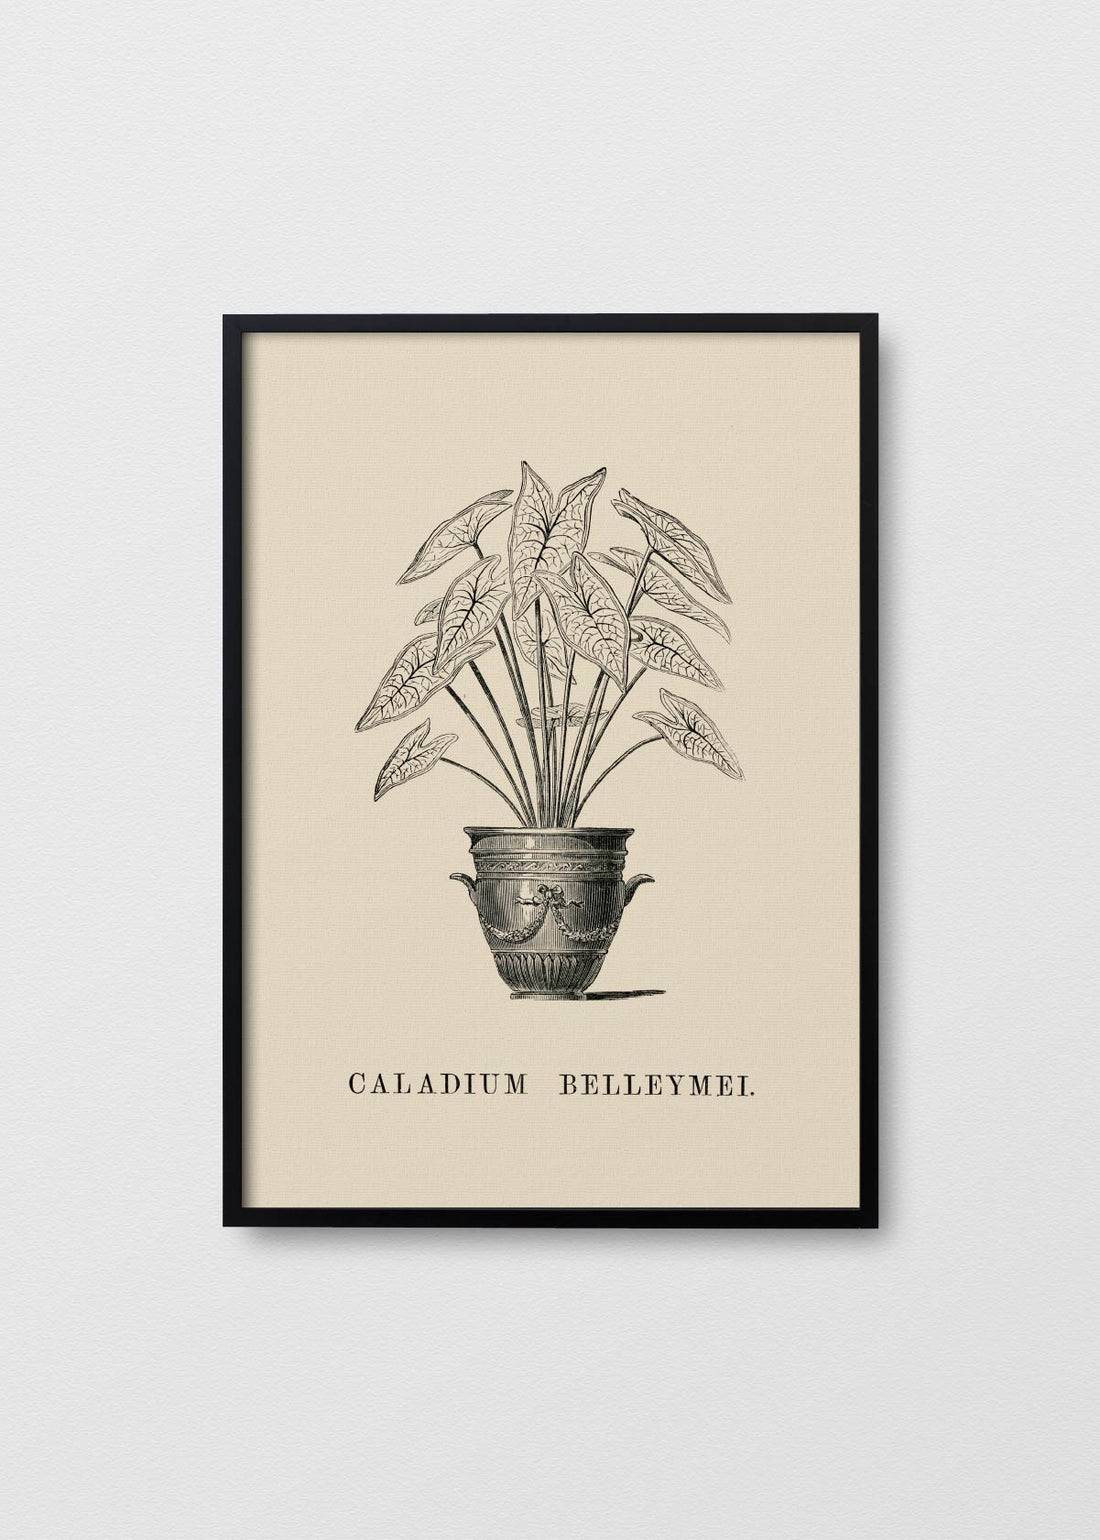 Caladium Belleymei - Testimoniaprints